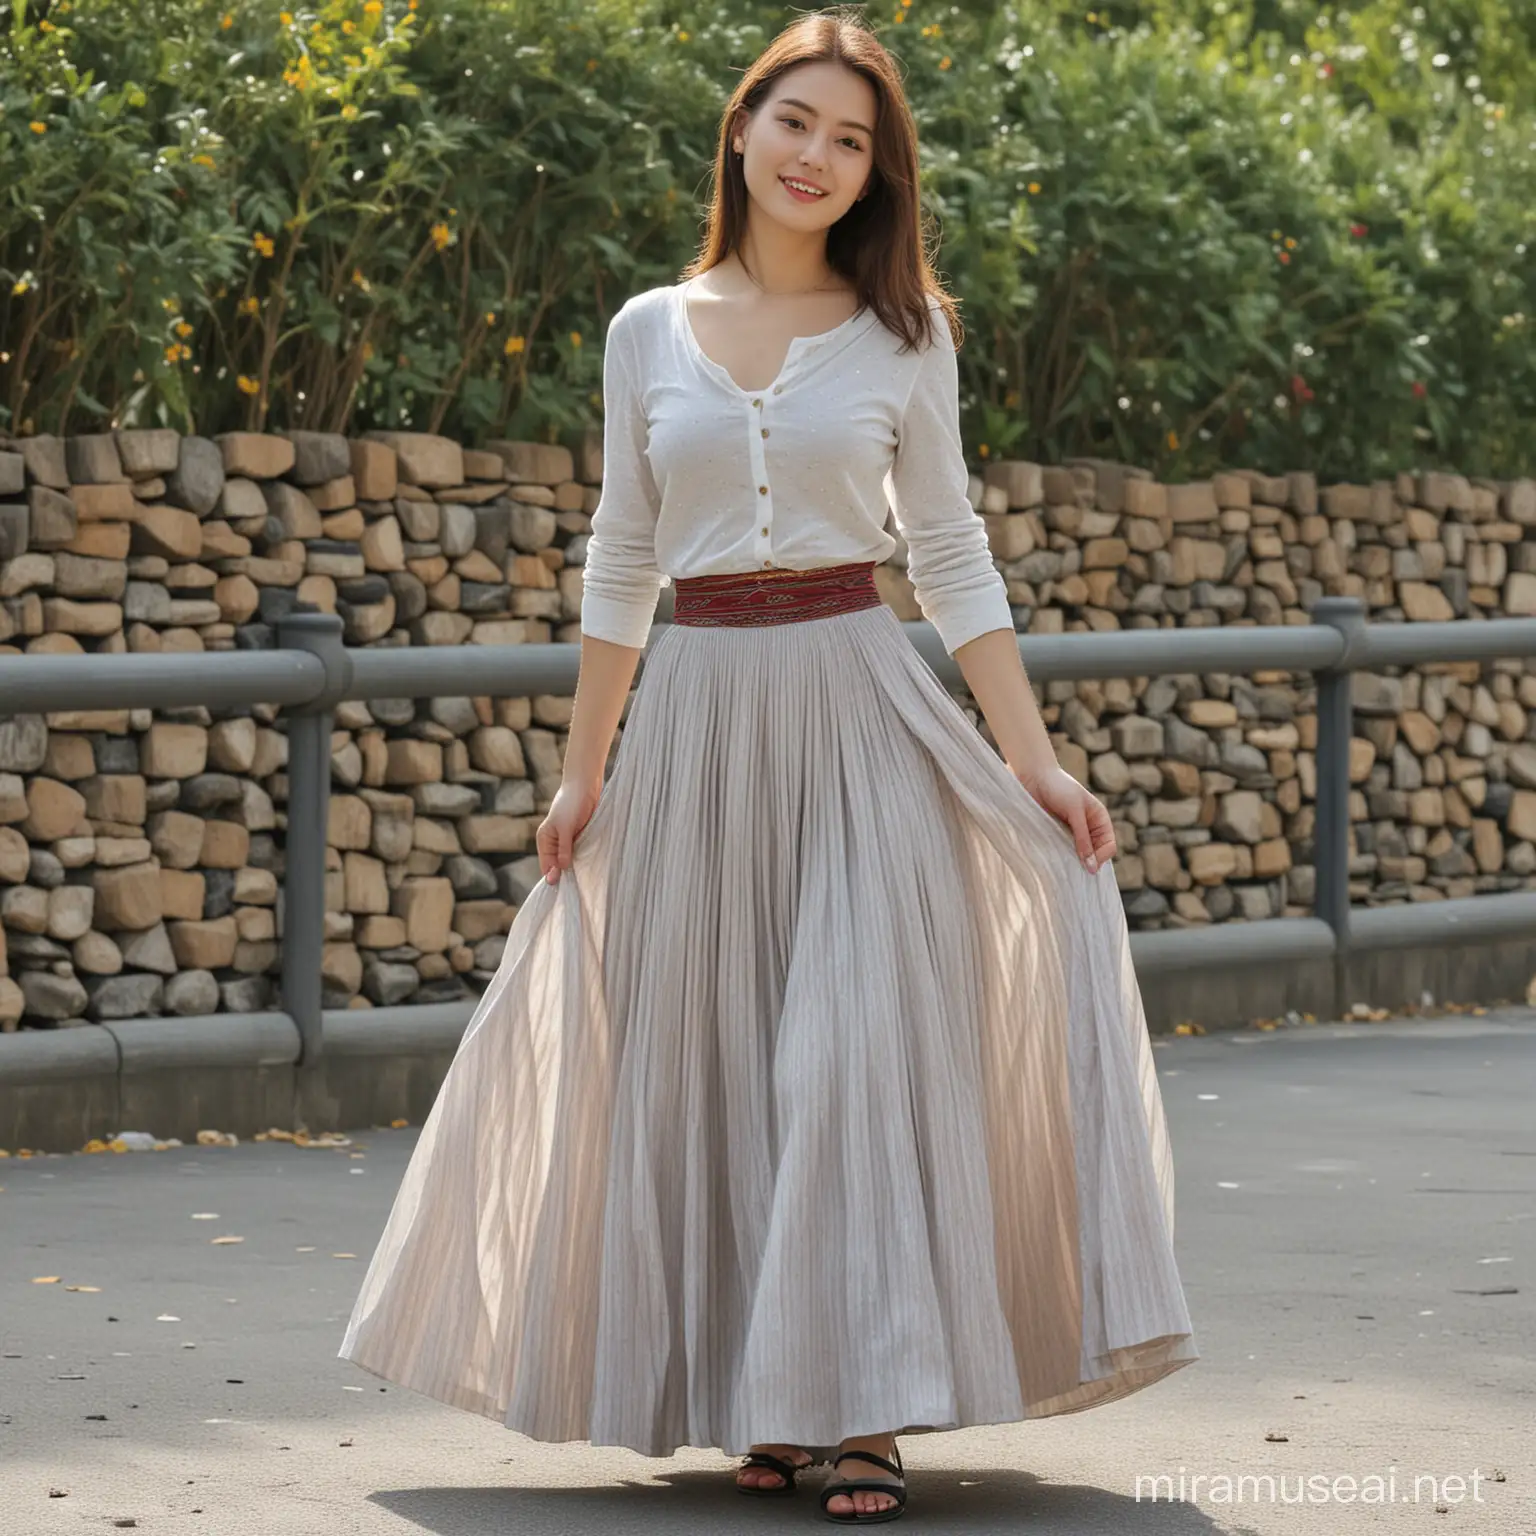 Graceful Young Woman in an Elegant FloorLength Skirt